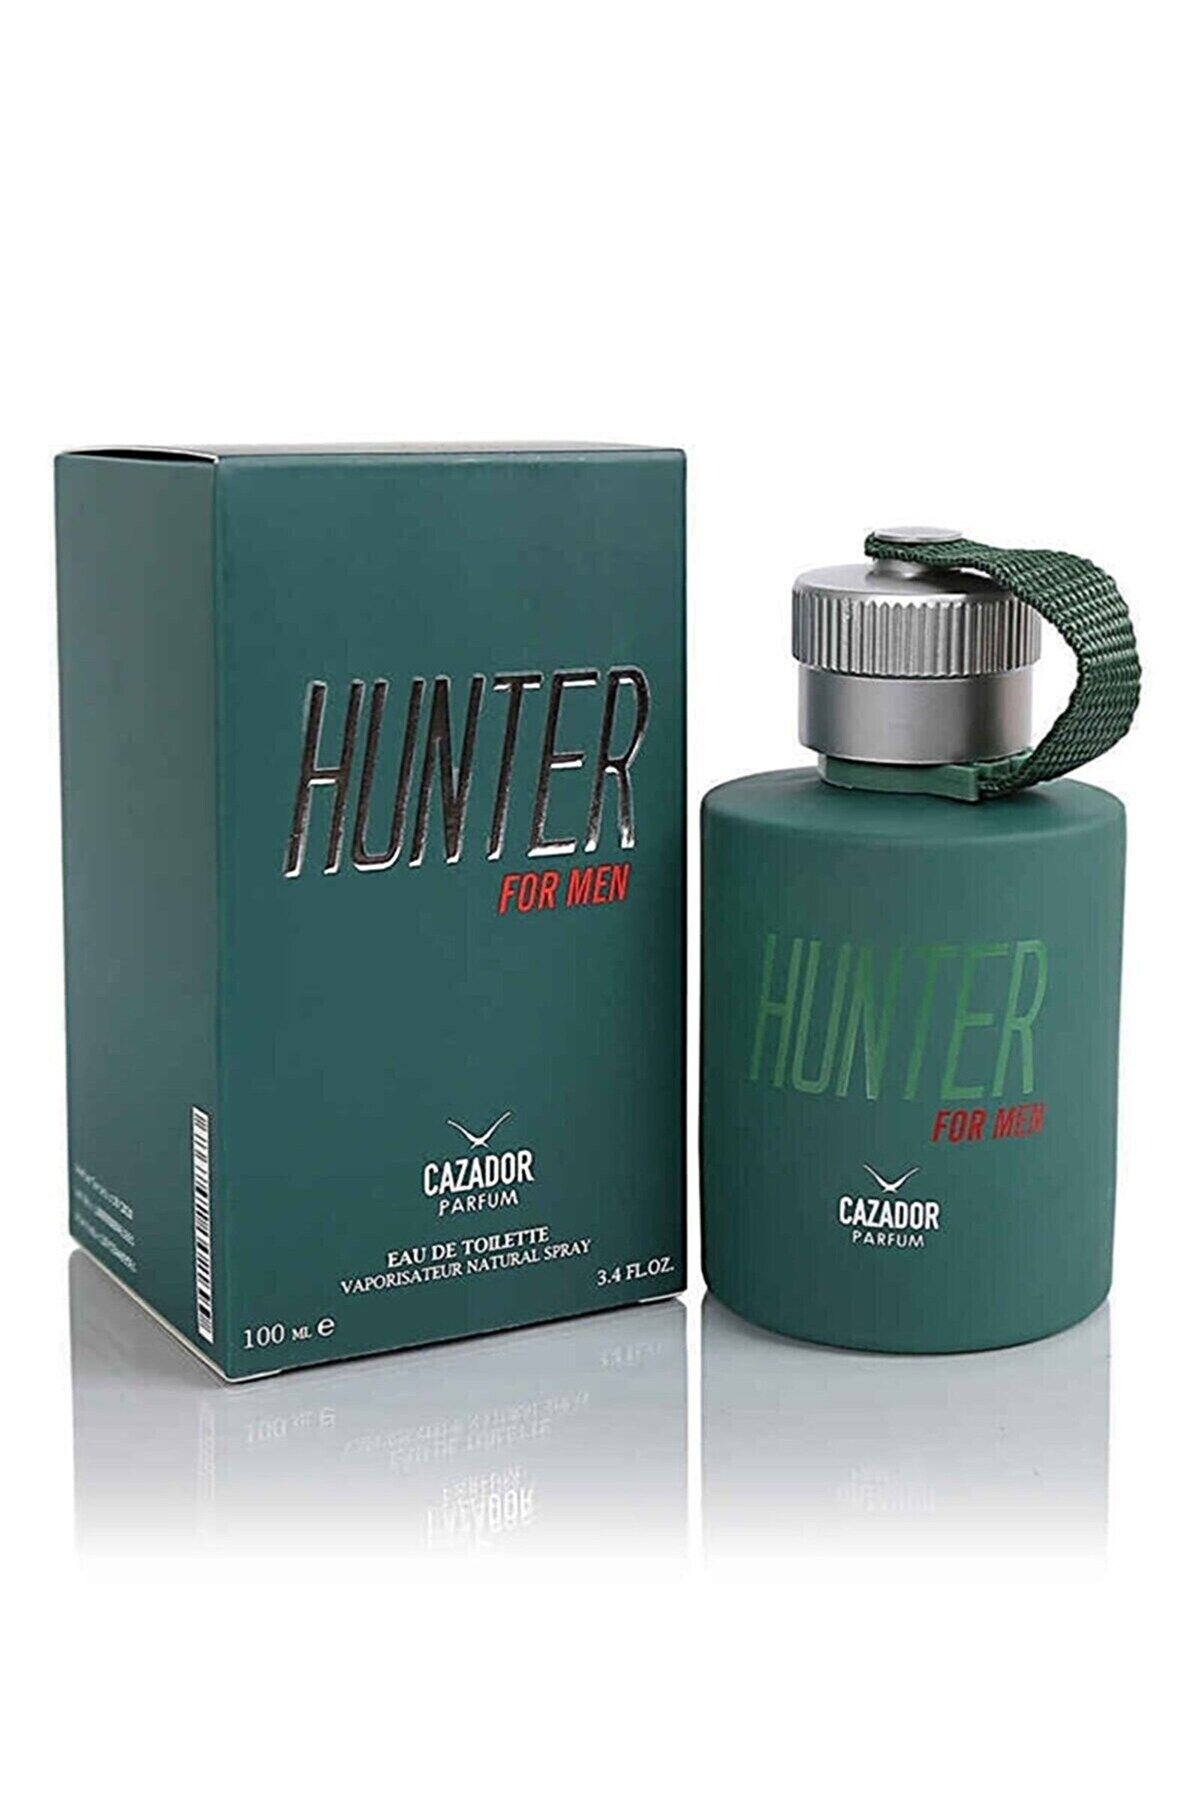 Cazador Caz 9561 Hunter Parfum 100cl St